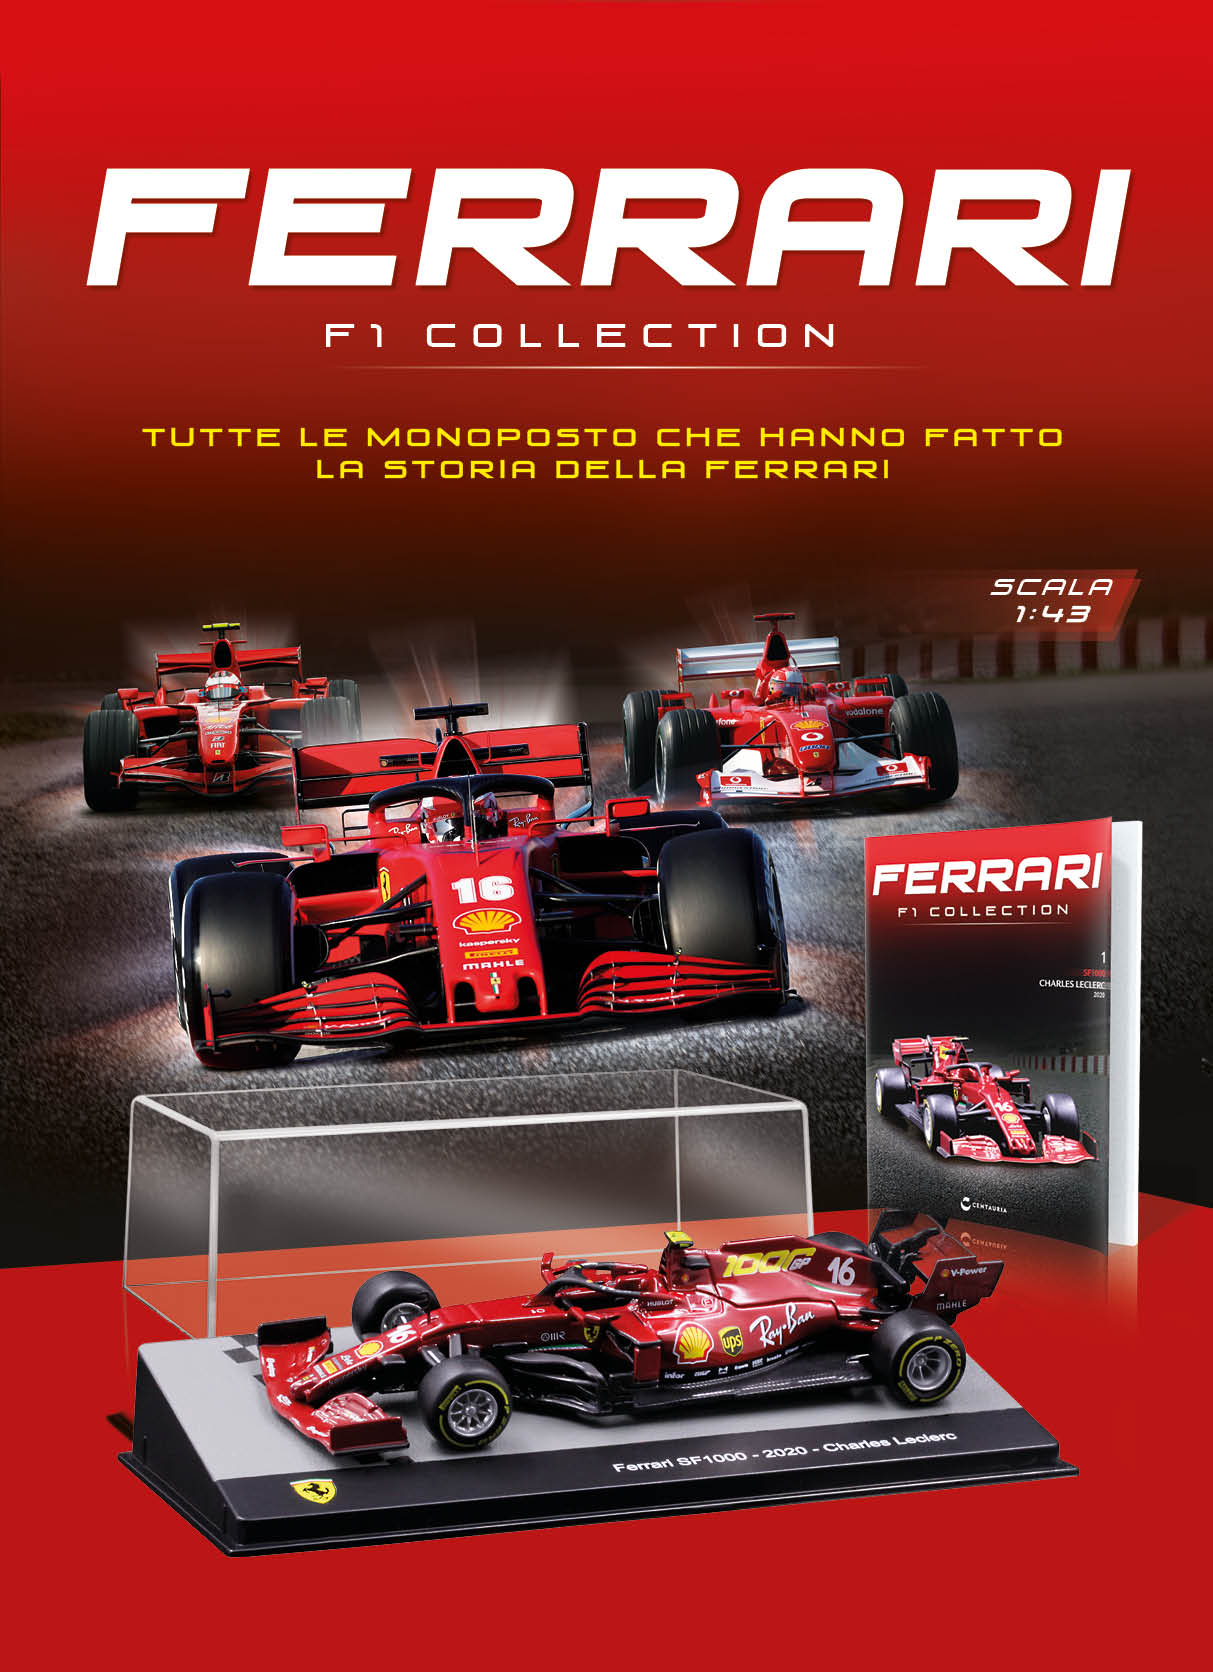 Ferrari F1 Collection new gadget 113